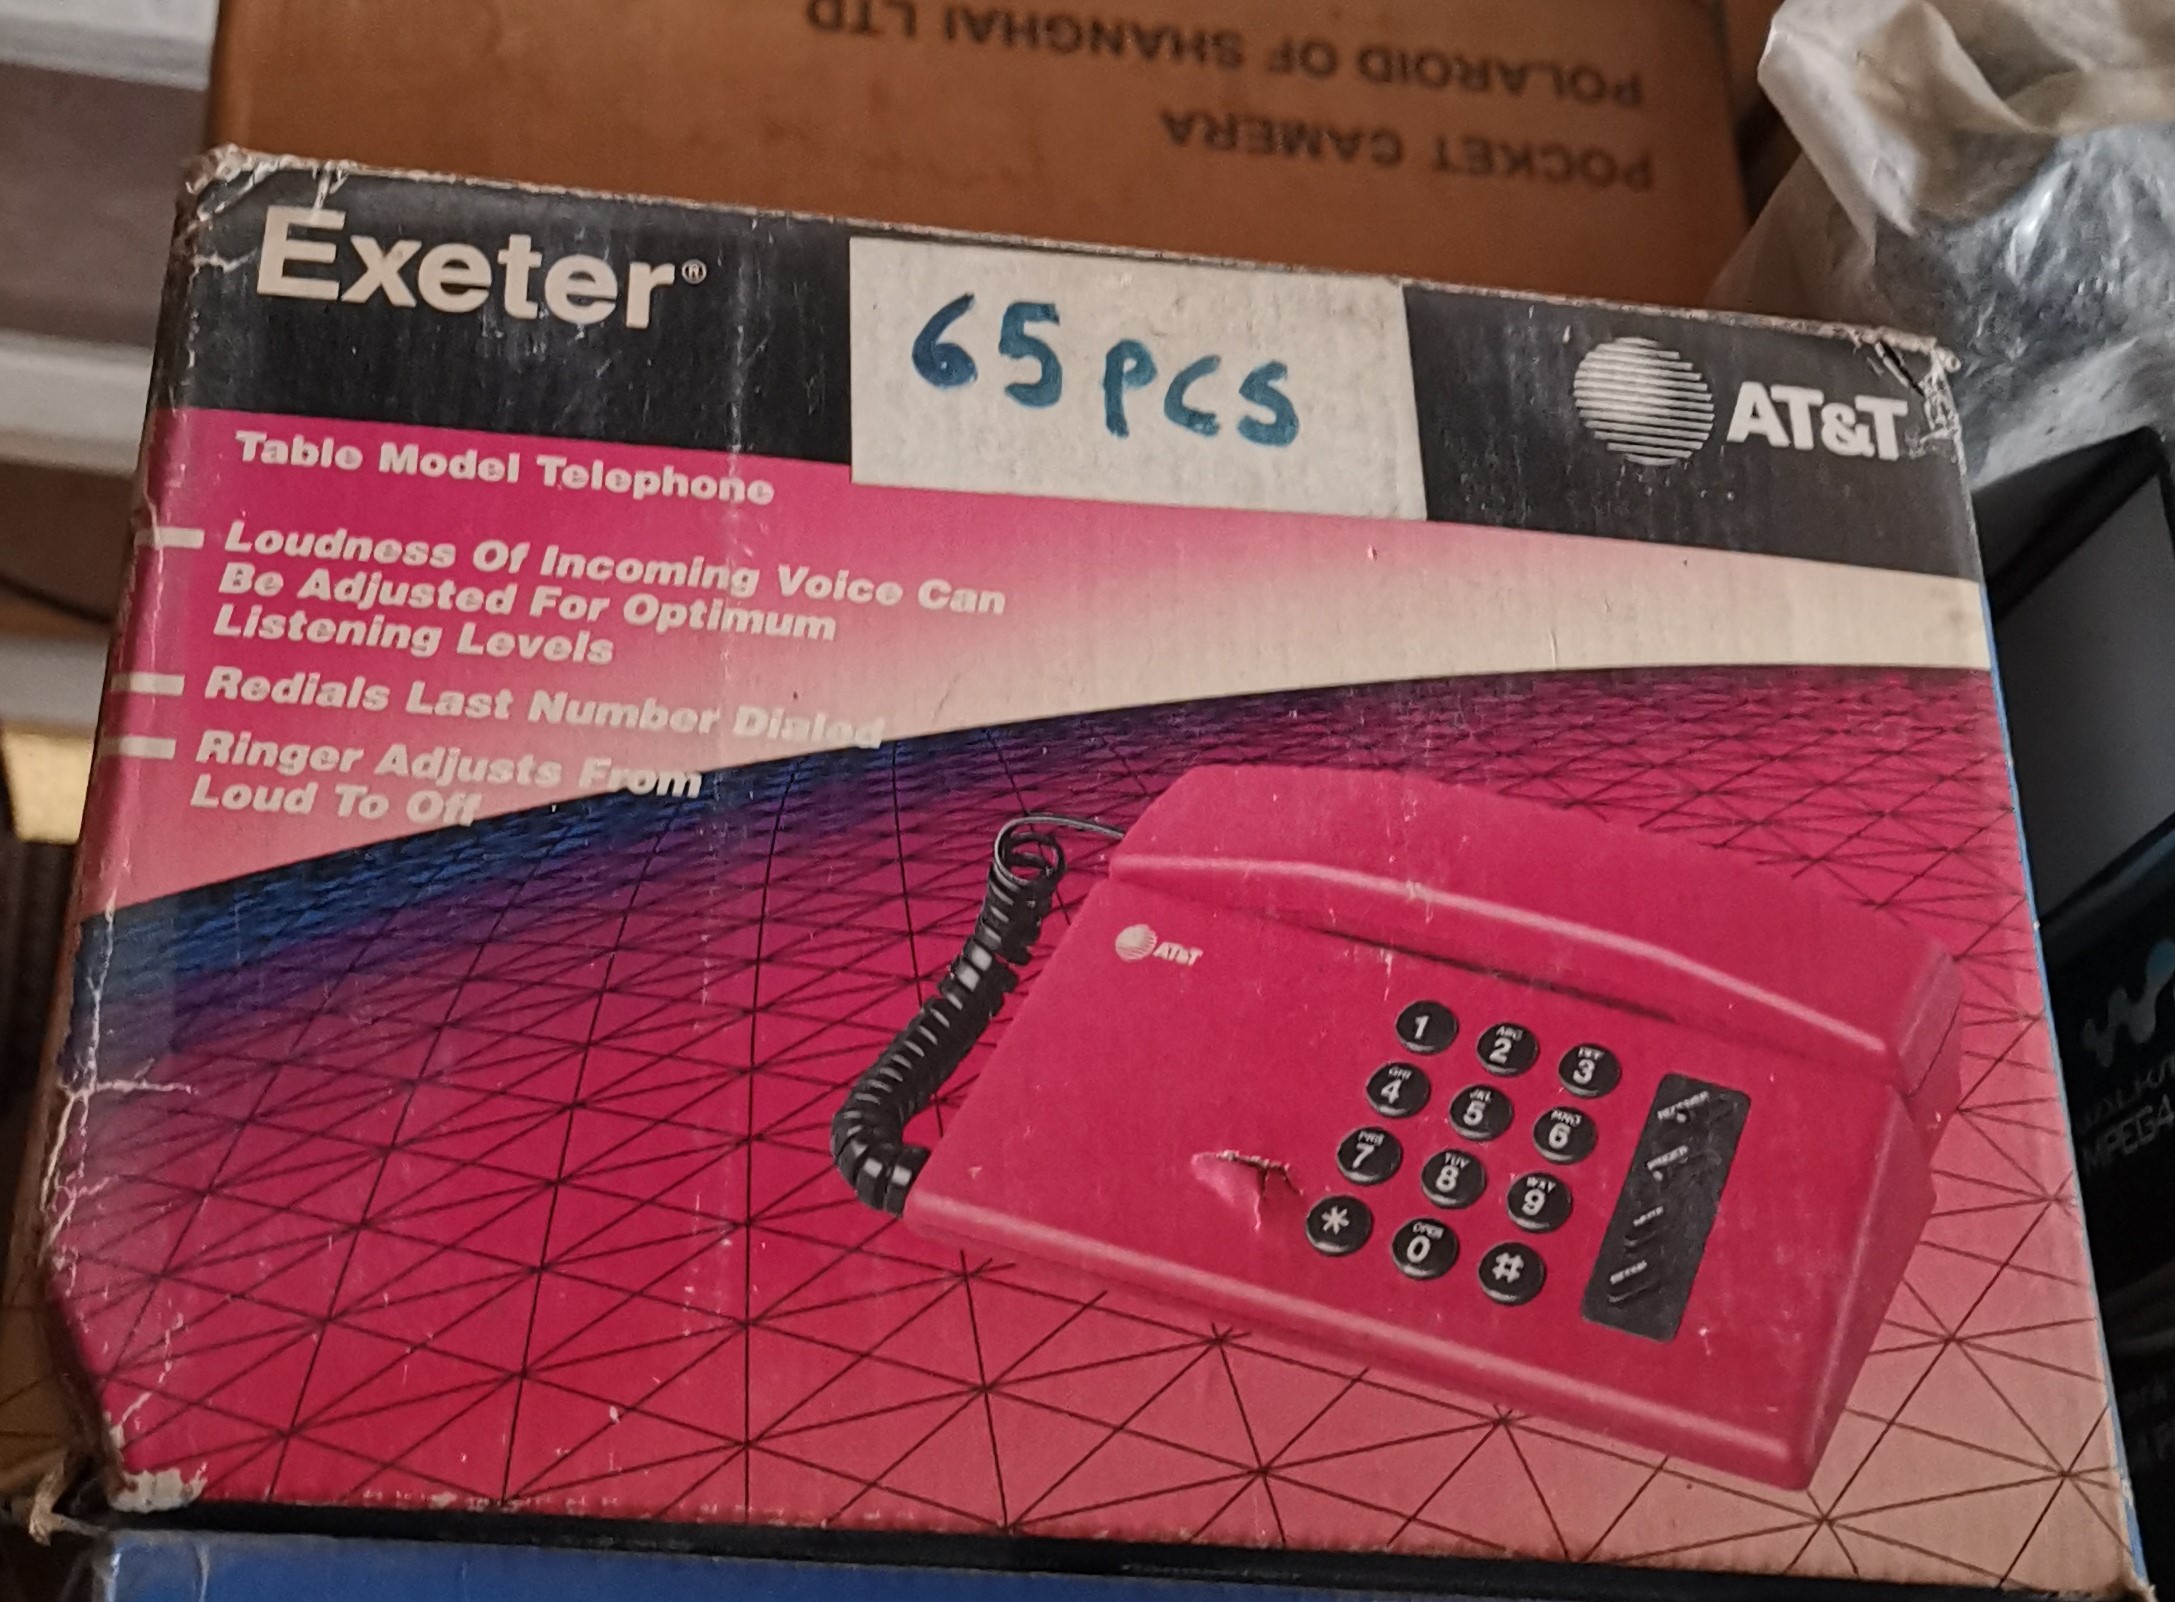 Exeter landline phone